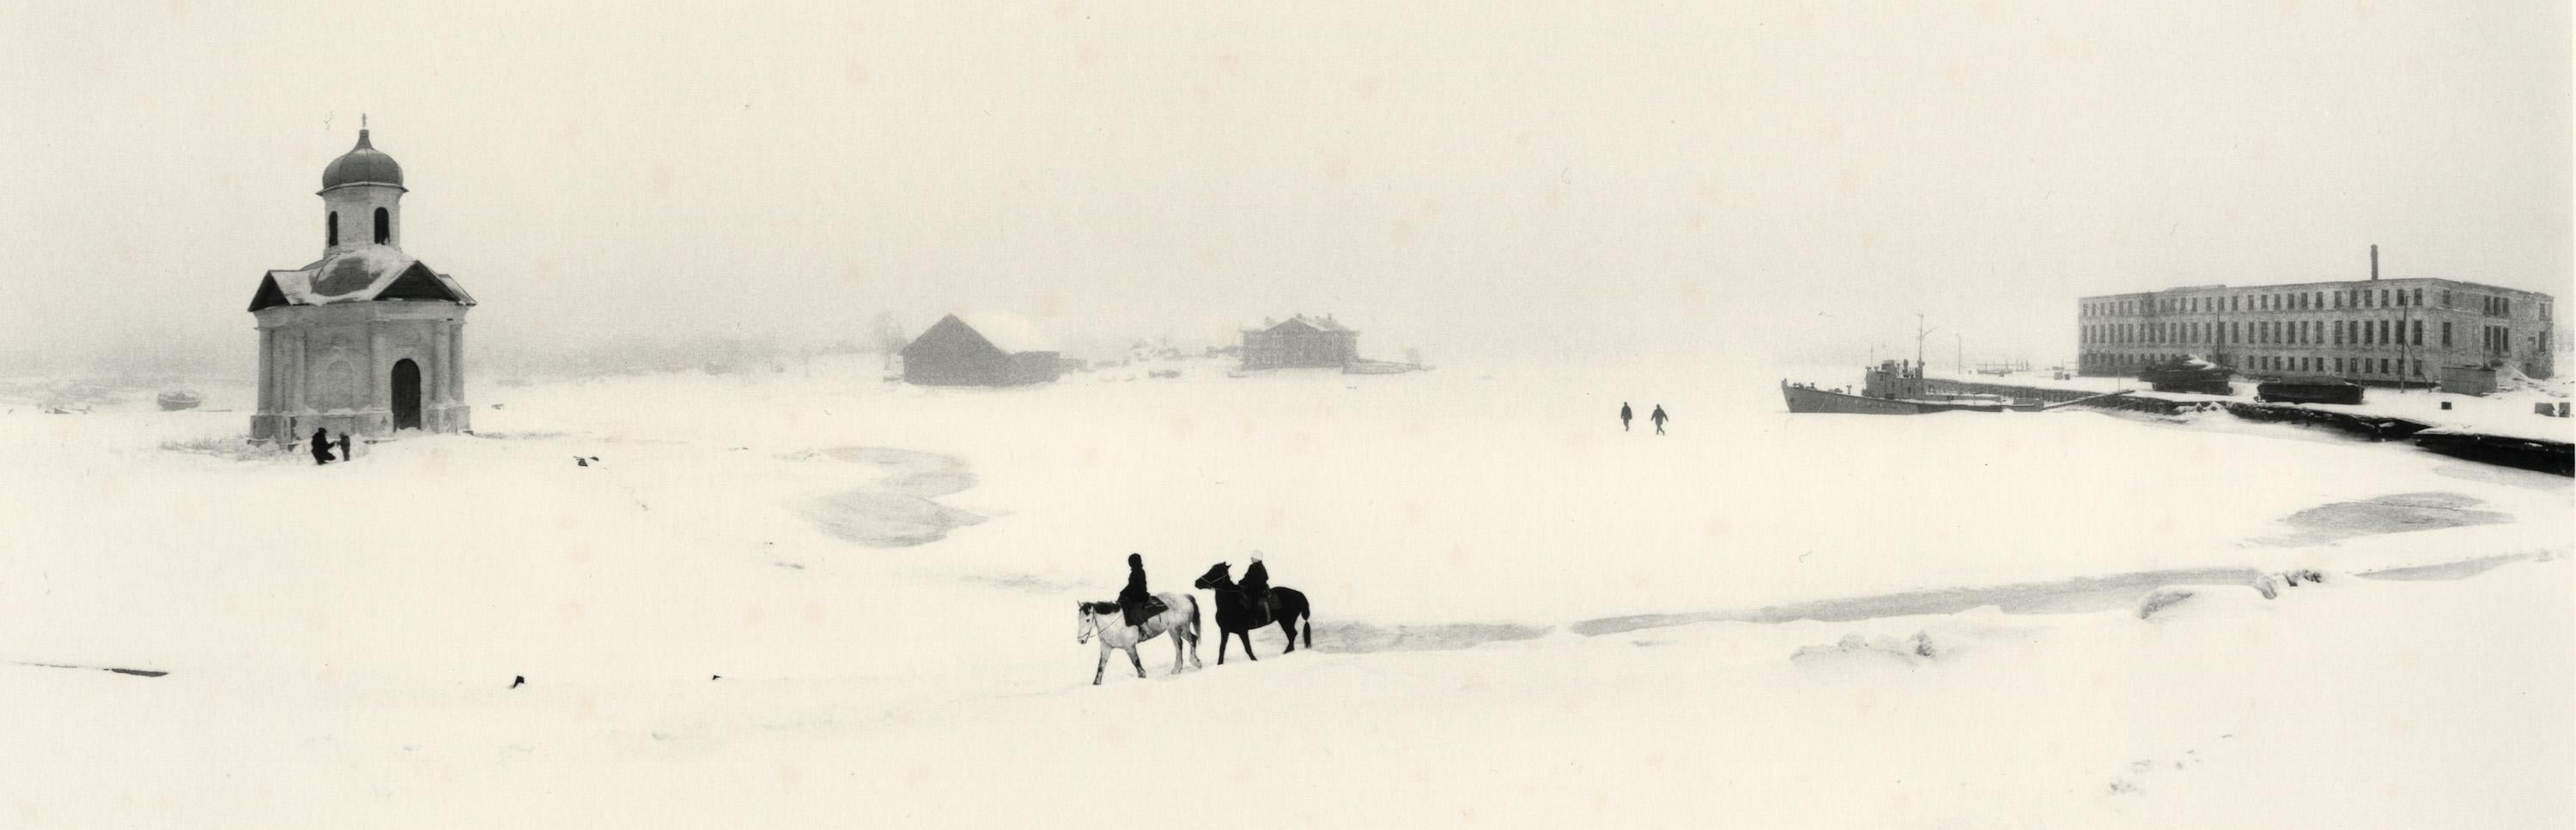 Pentti Sammallahti Black and White Photograph - Solovki, White Sea, Russia (Village winter scene, people on horseback)